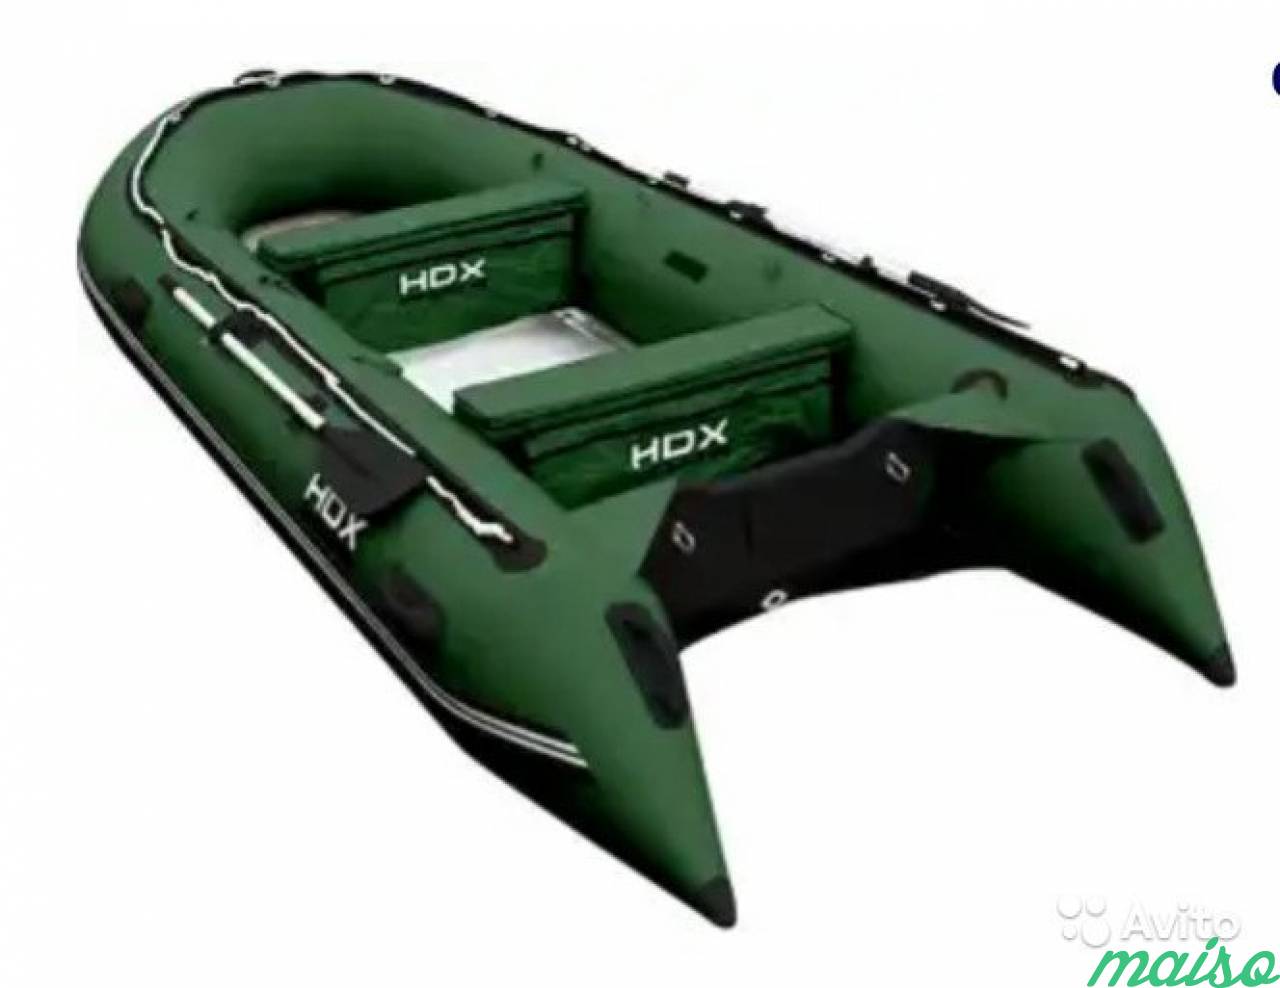 Лодка HDX oxygen 4.3 м, зеленая в Санкт-Петербурге. Фото 1